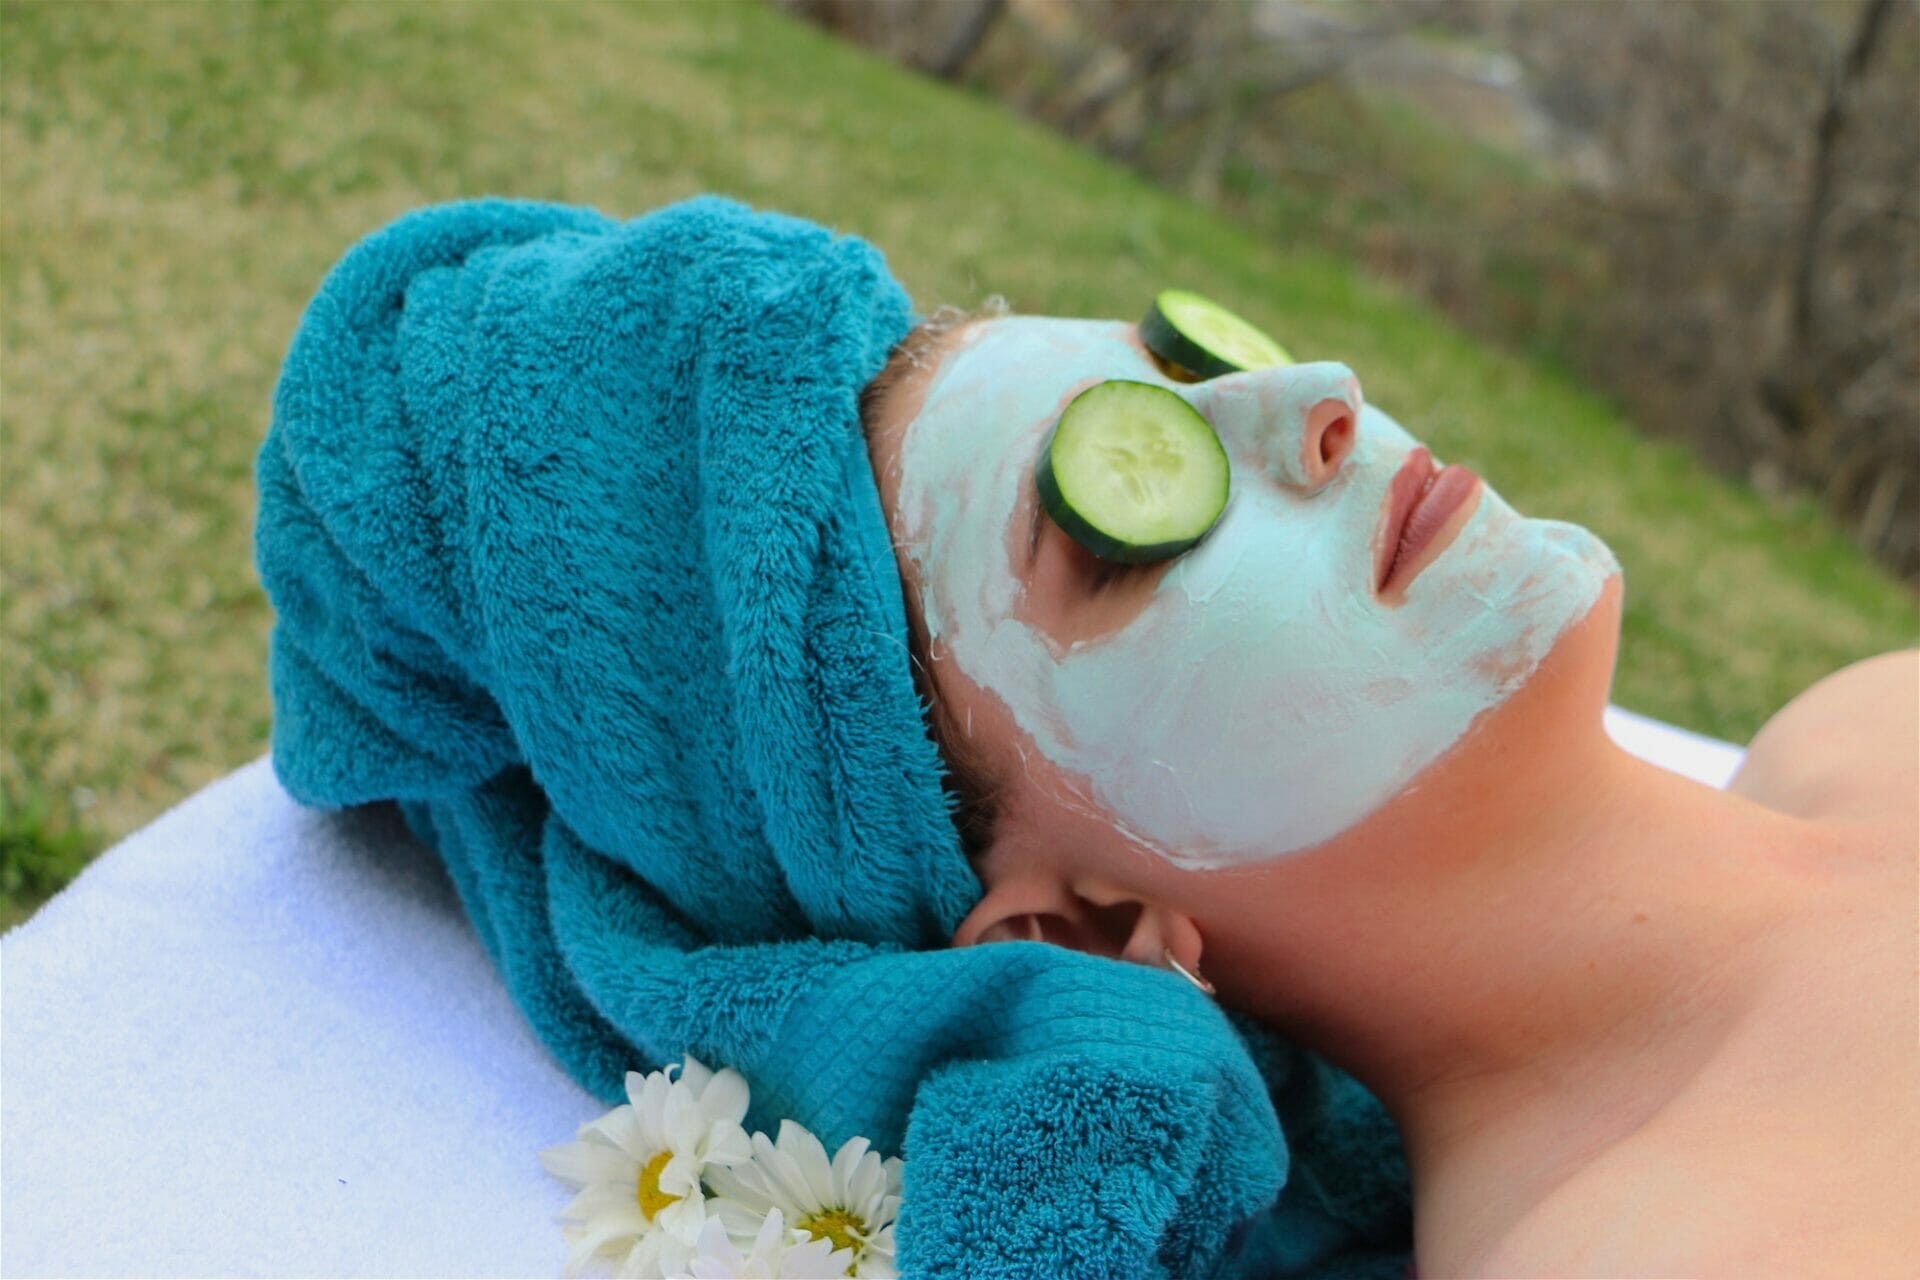 Woman getting organic clay facial at outdoor spa.